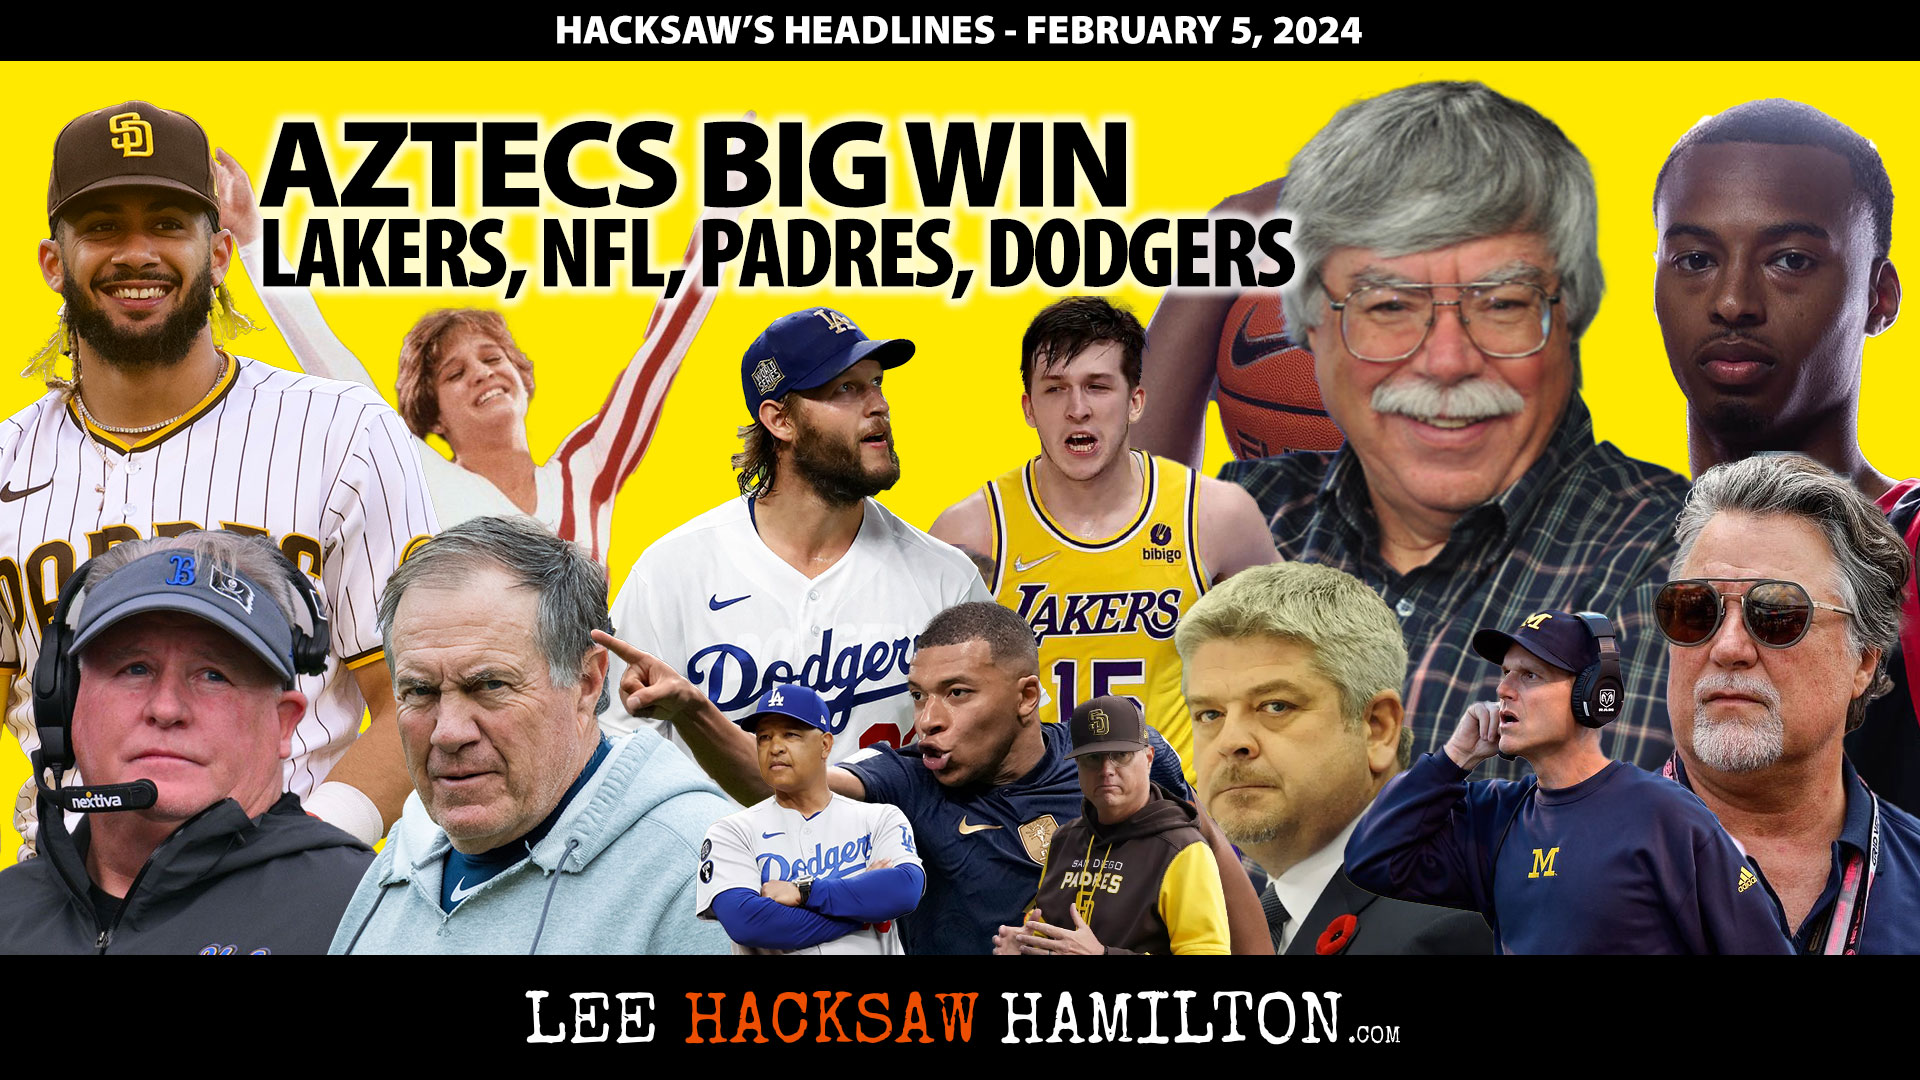 Lee Hacksaw Hamilton discusses Aztecs Stomp Utah St, Lakers Road Wins, NFL Notebook, Padres/Dodgers Notes, Kings Shakeup